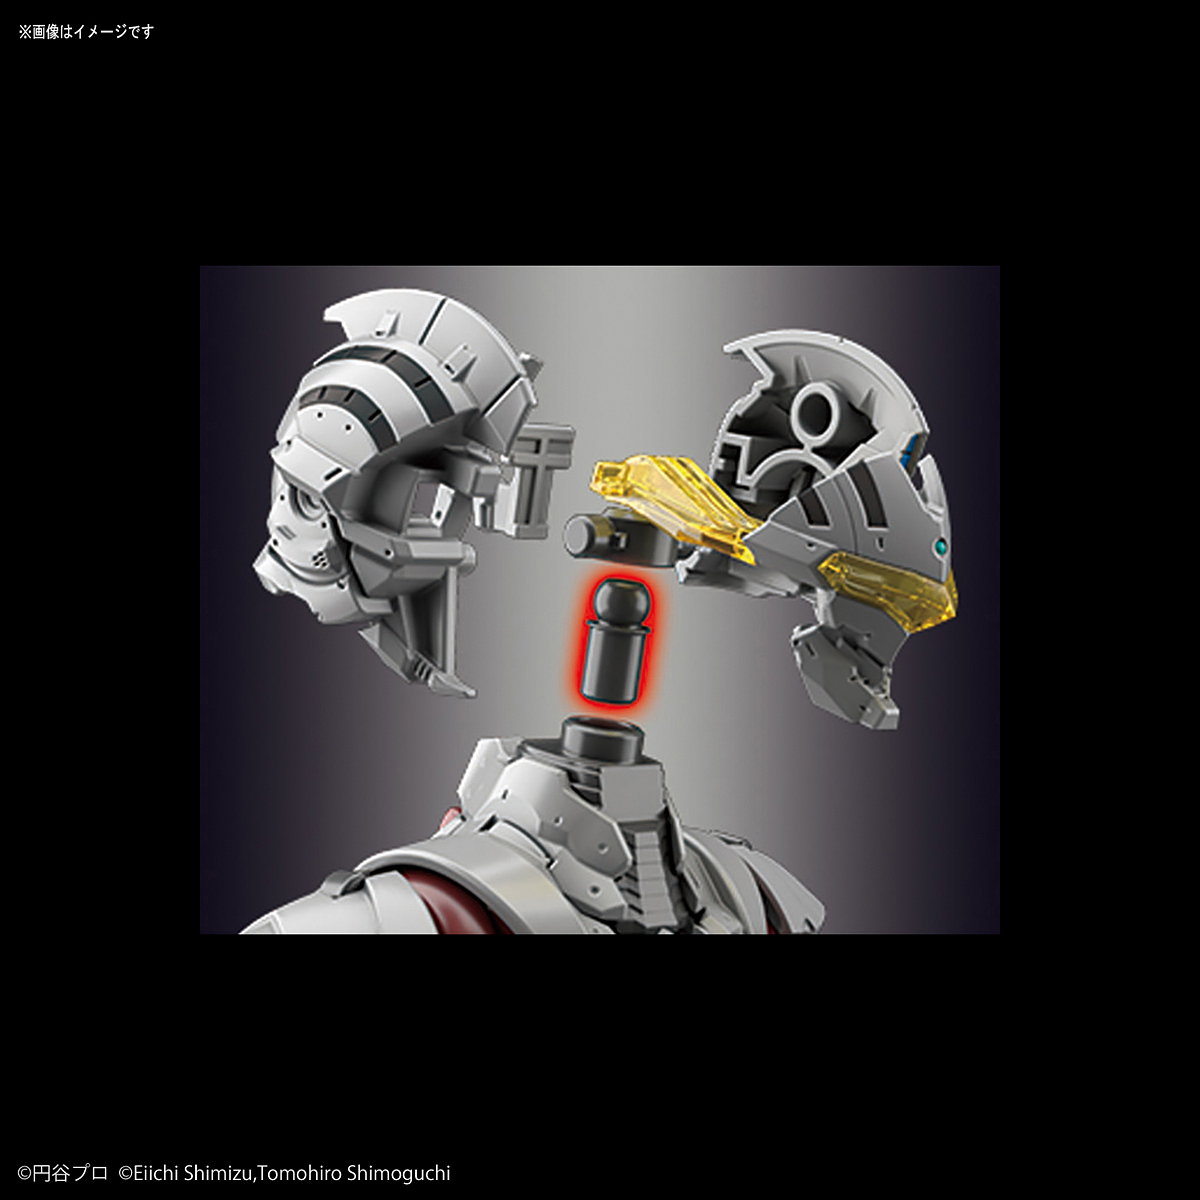 Figure-rise Standard - Ultraman Suit Ver 7.5 [Action]